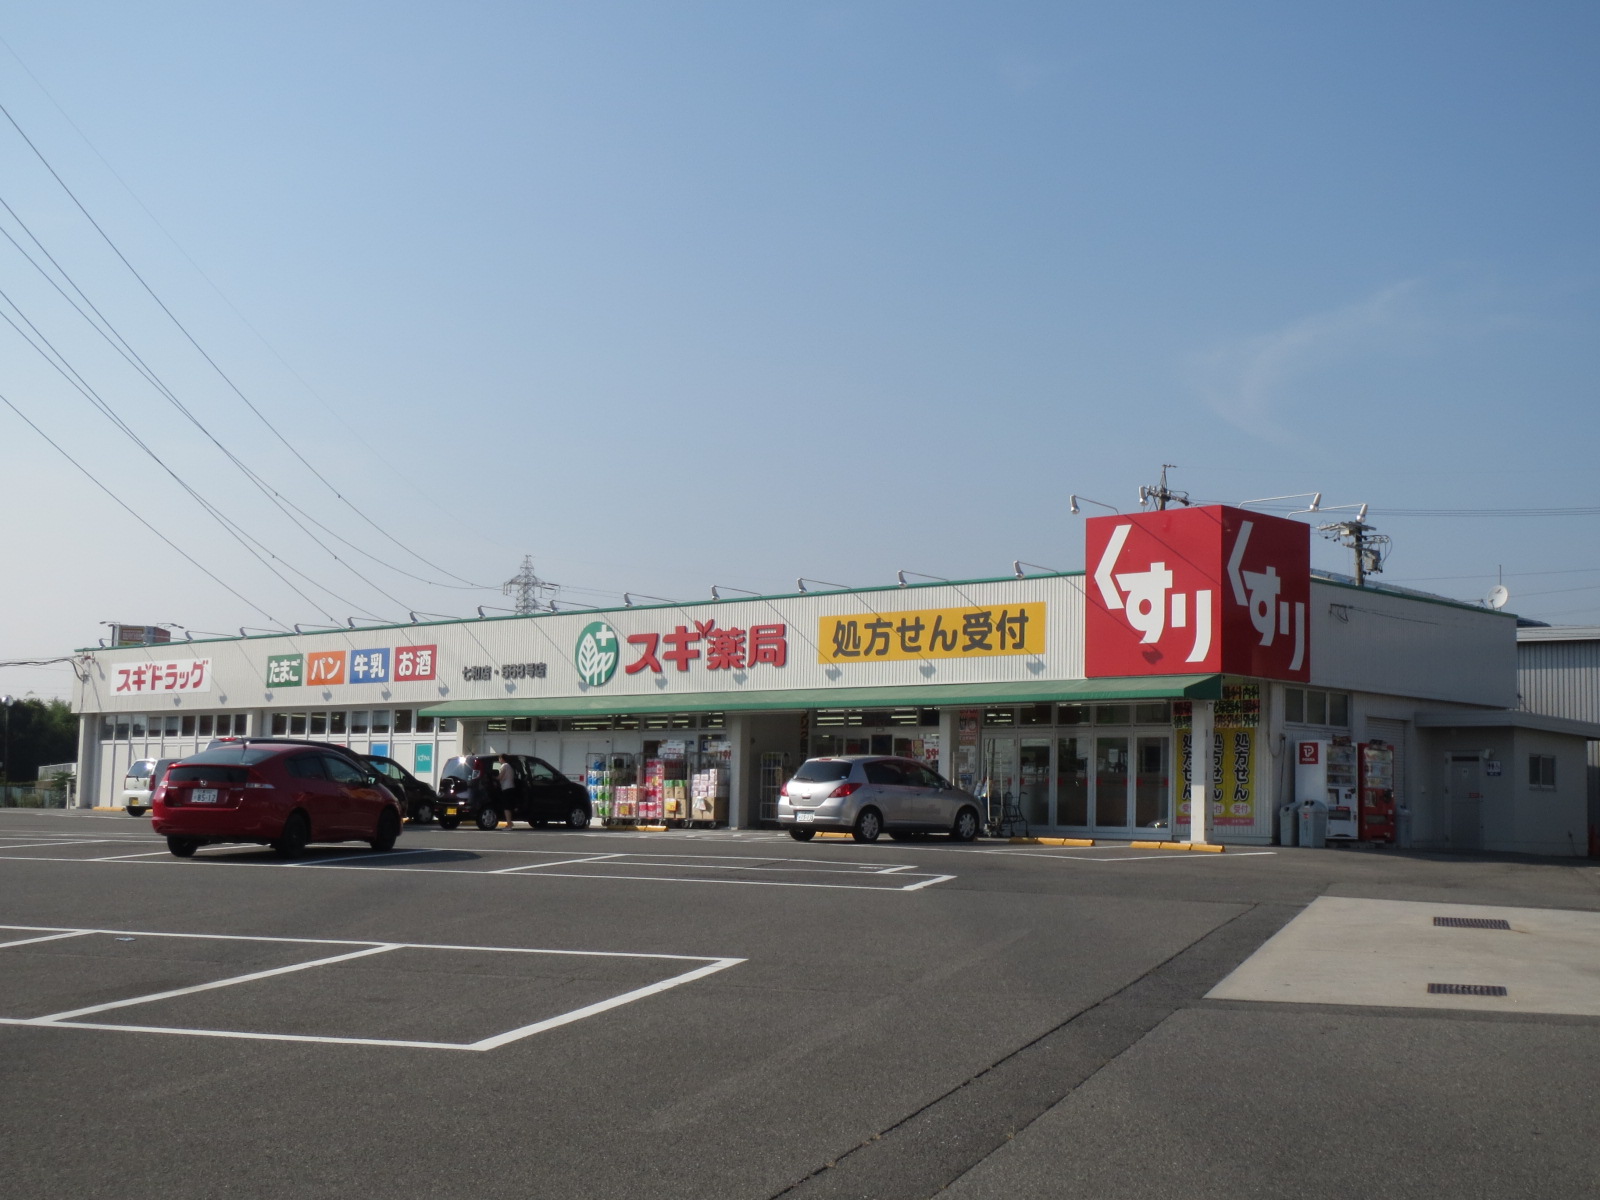 Dorakkusutoa. Cedar pharmacy Oyamada shop 1290m until (drugstore)